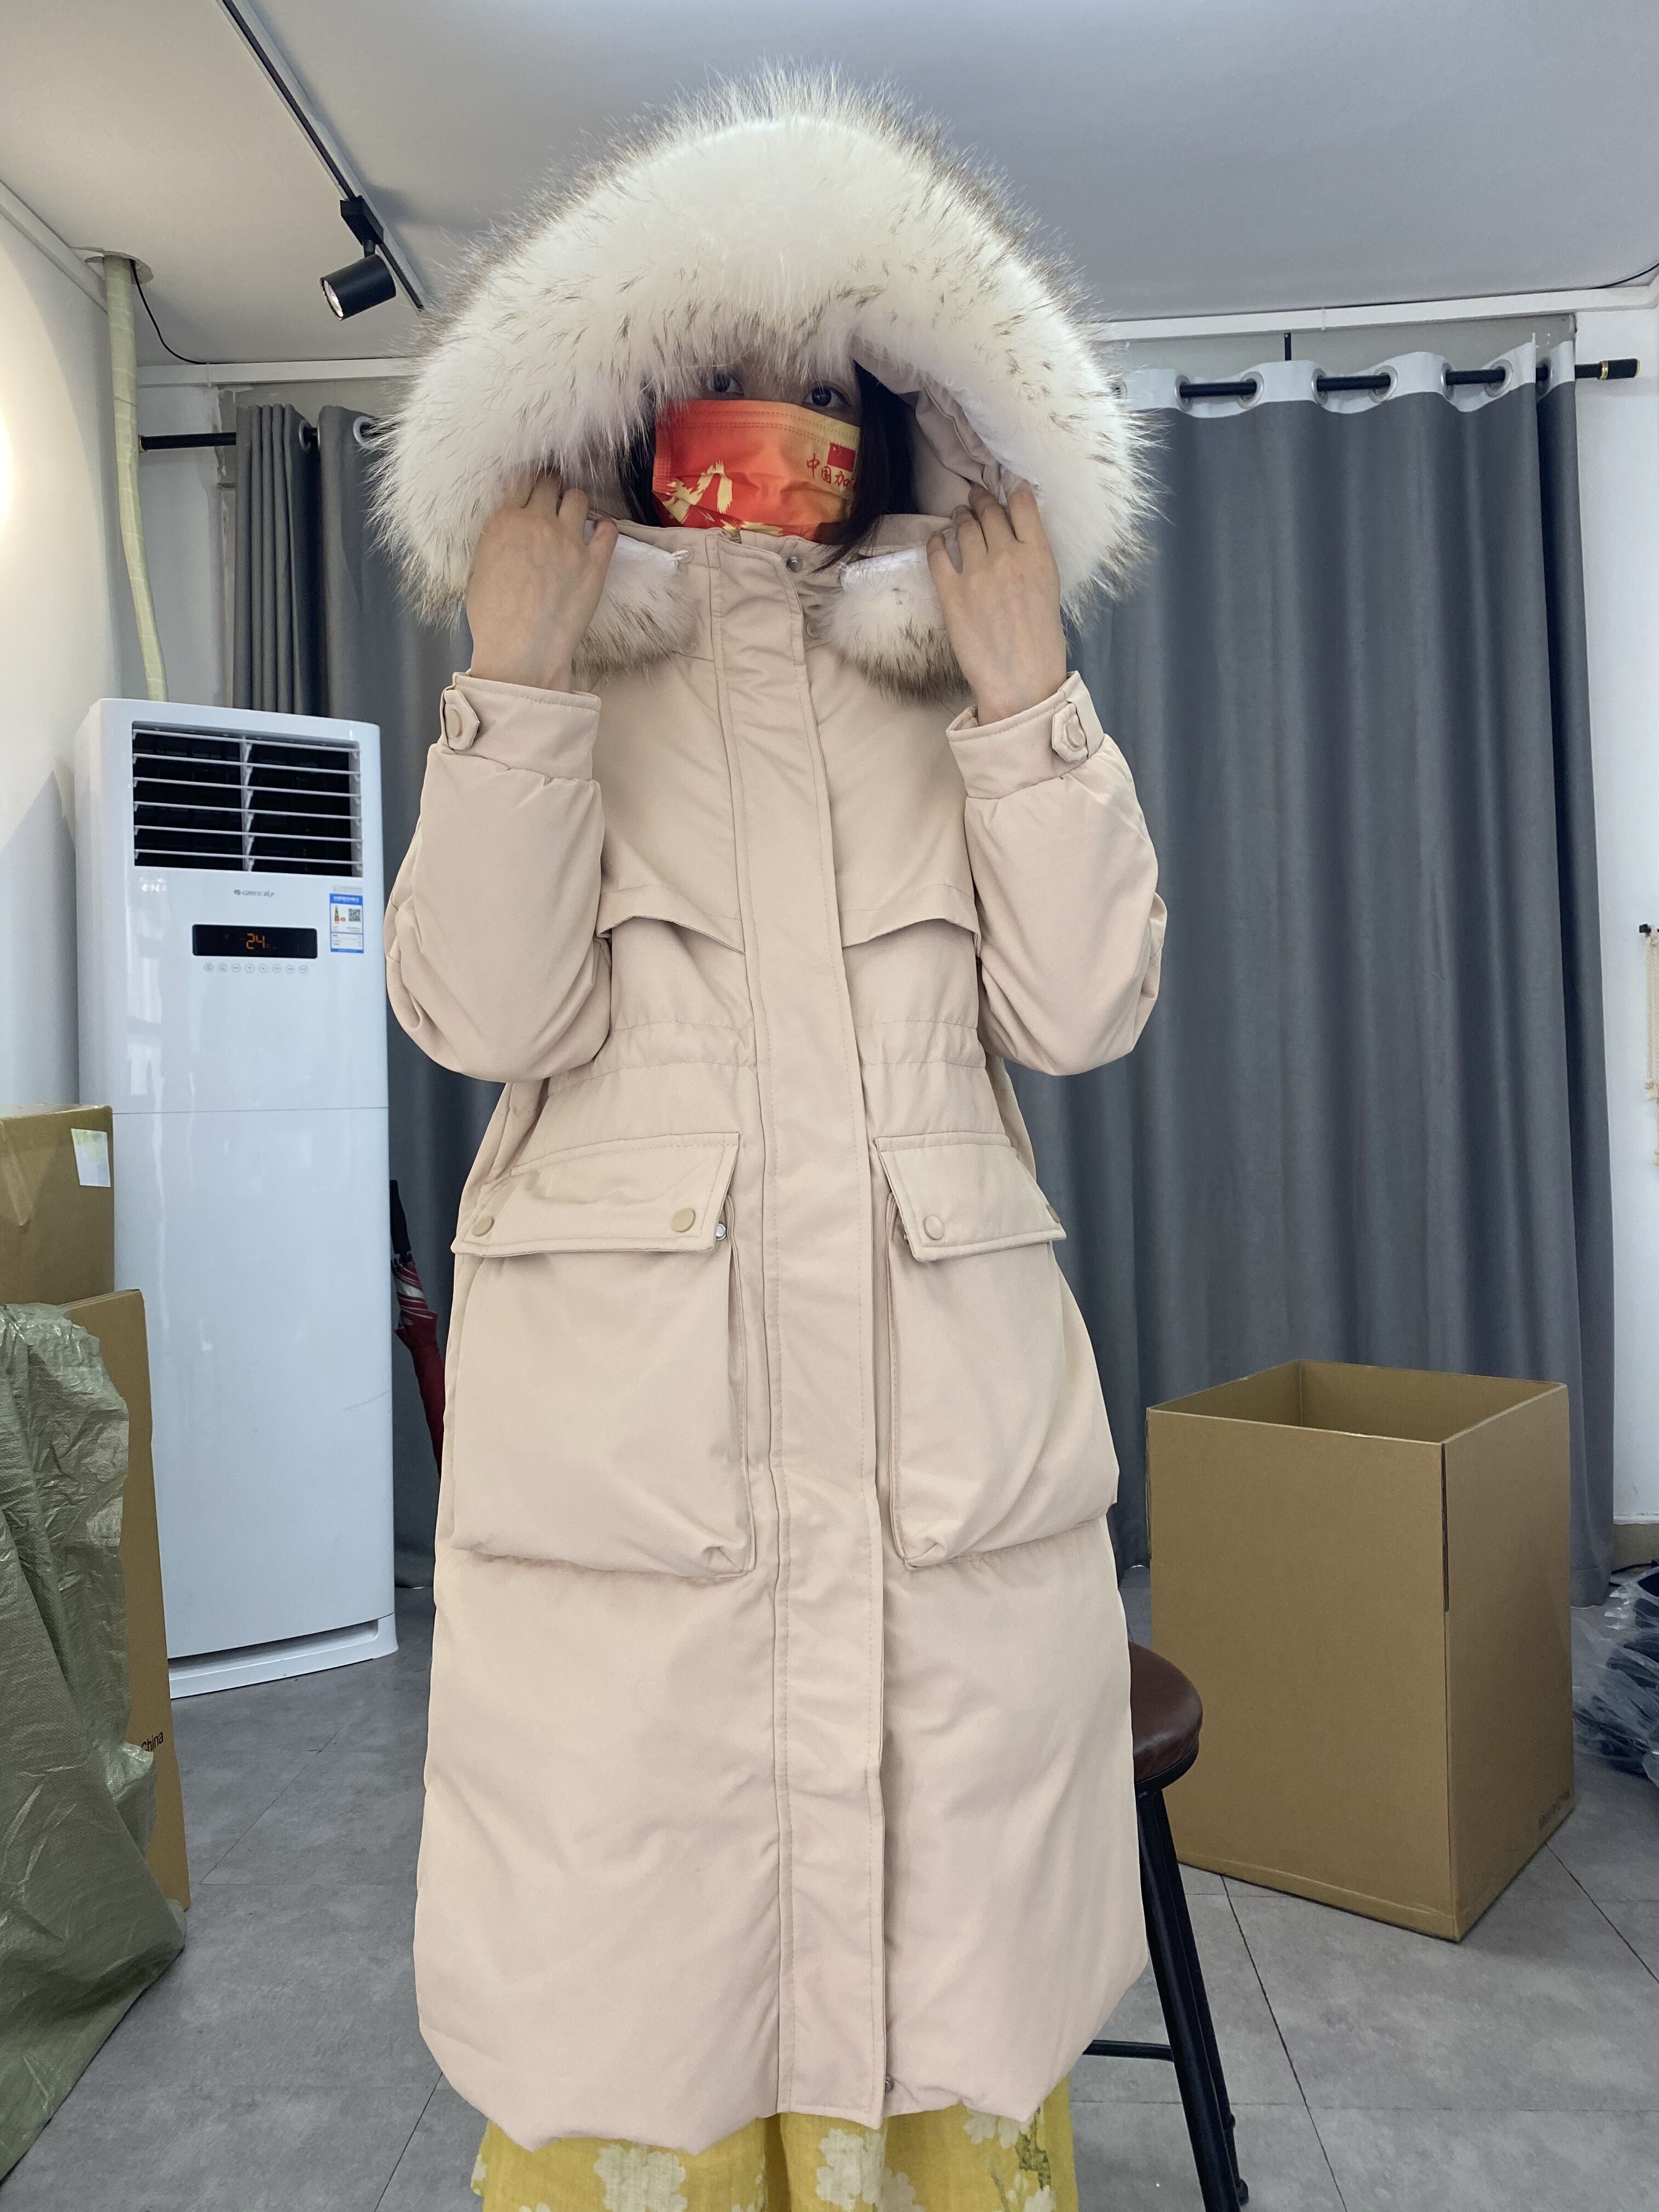 Fitaylor Winter Women Long Jacket Large Natural Fur Collar Hooded